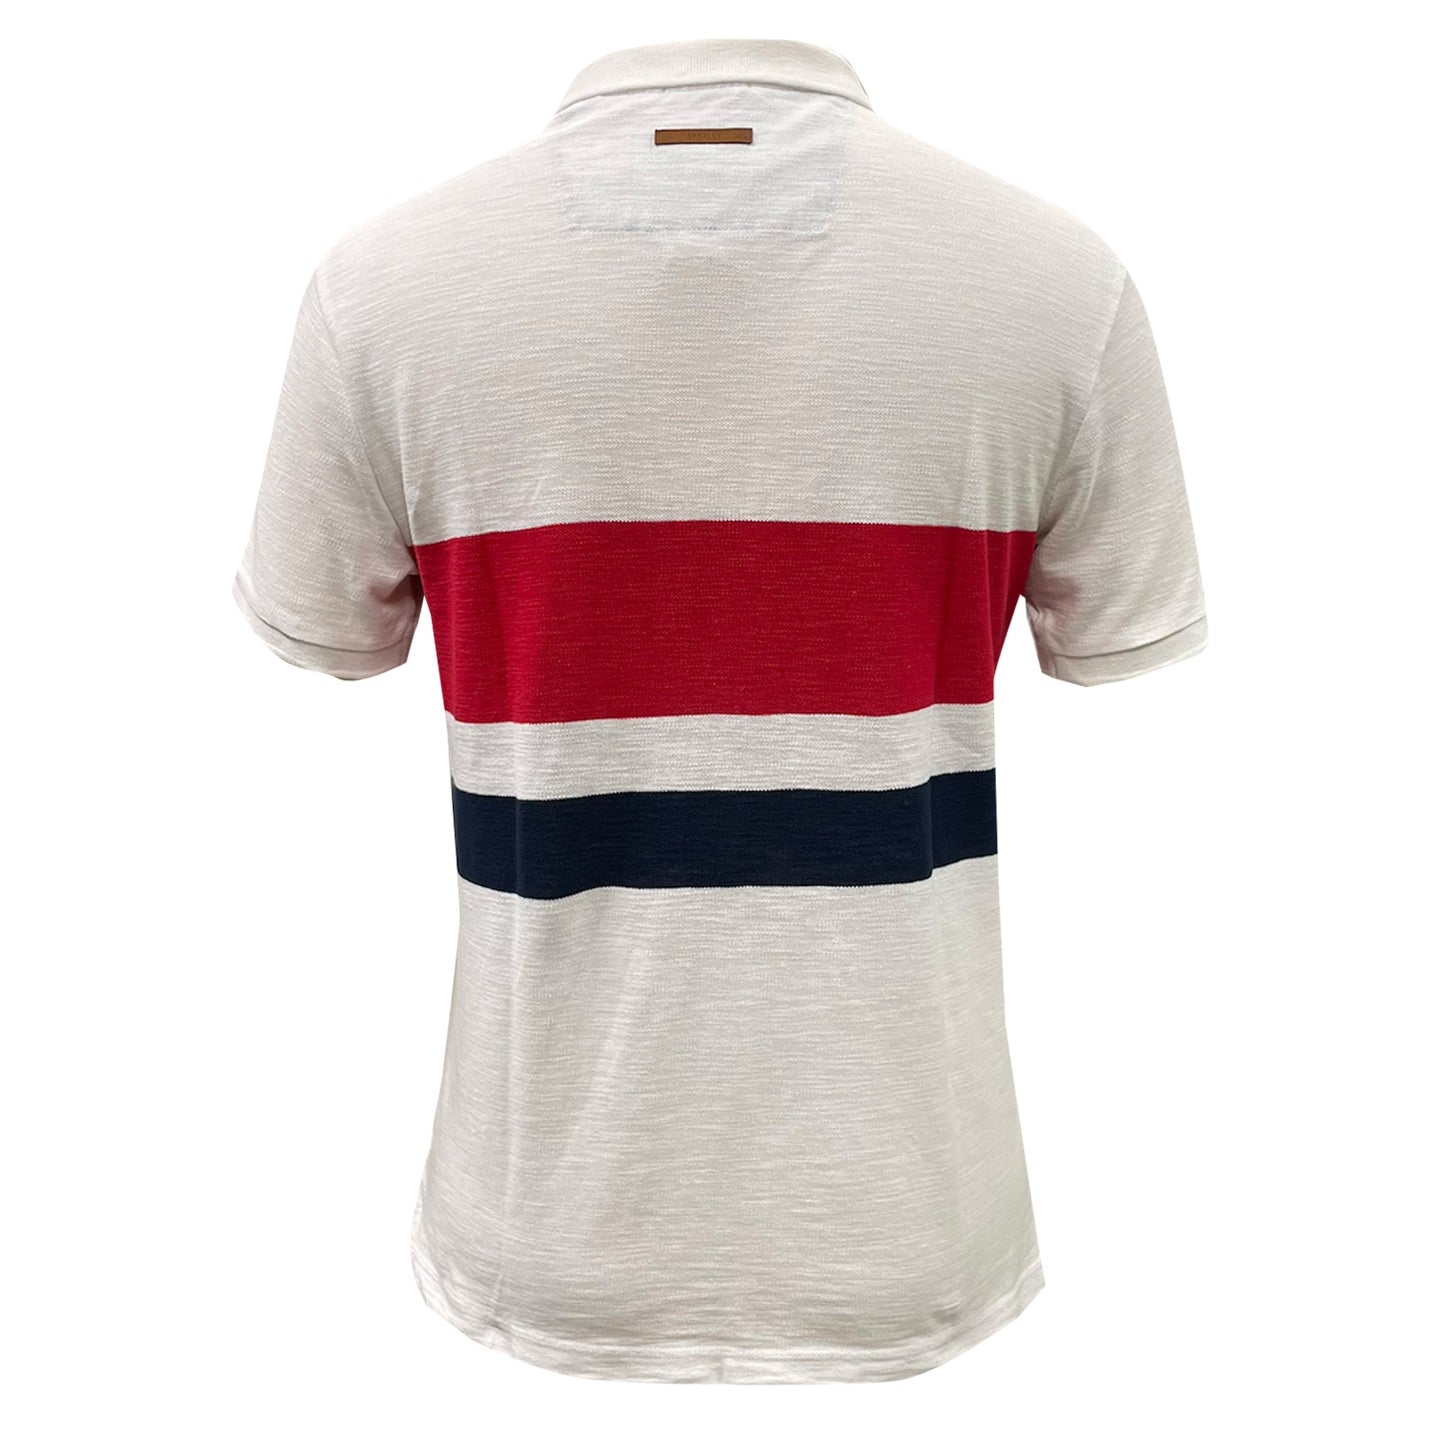 Croxley - Flatley Polo Shirt